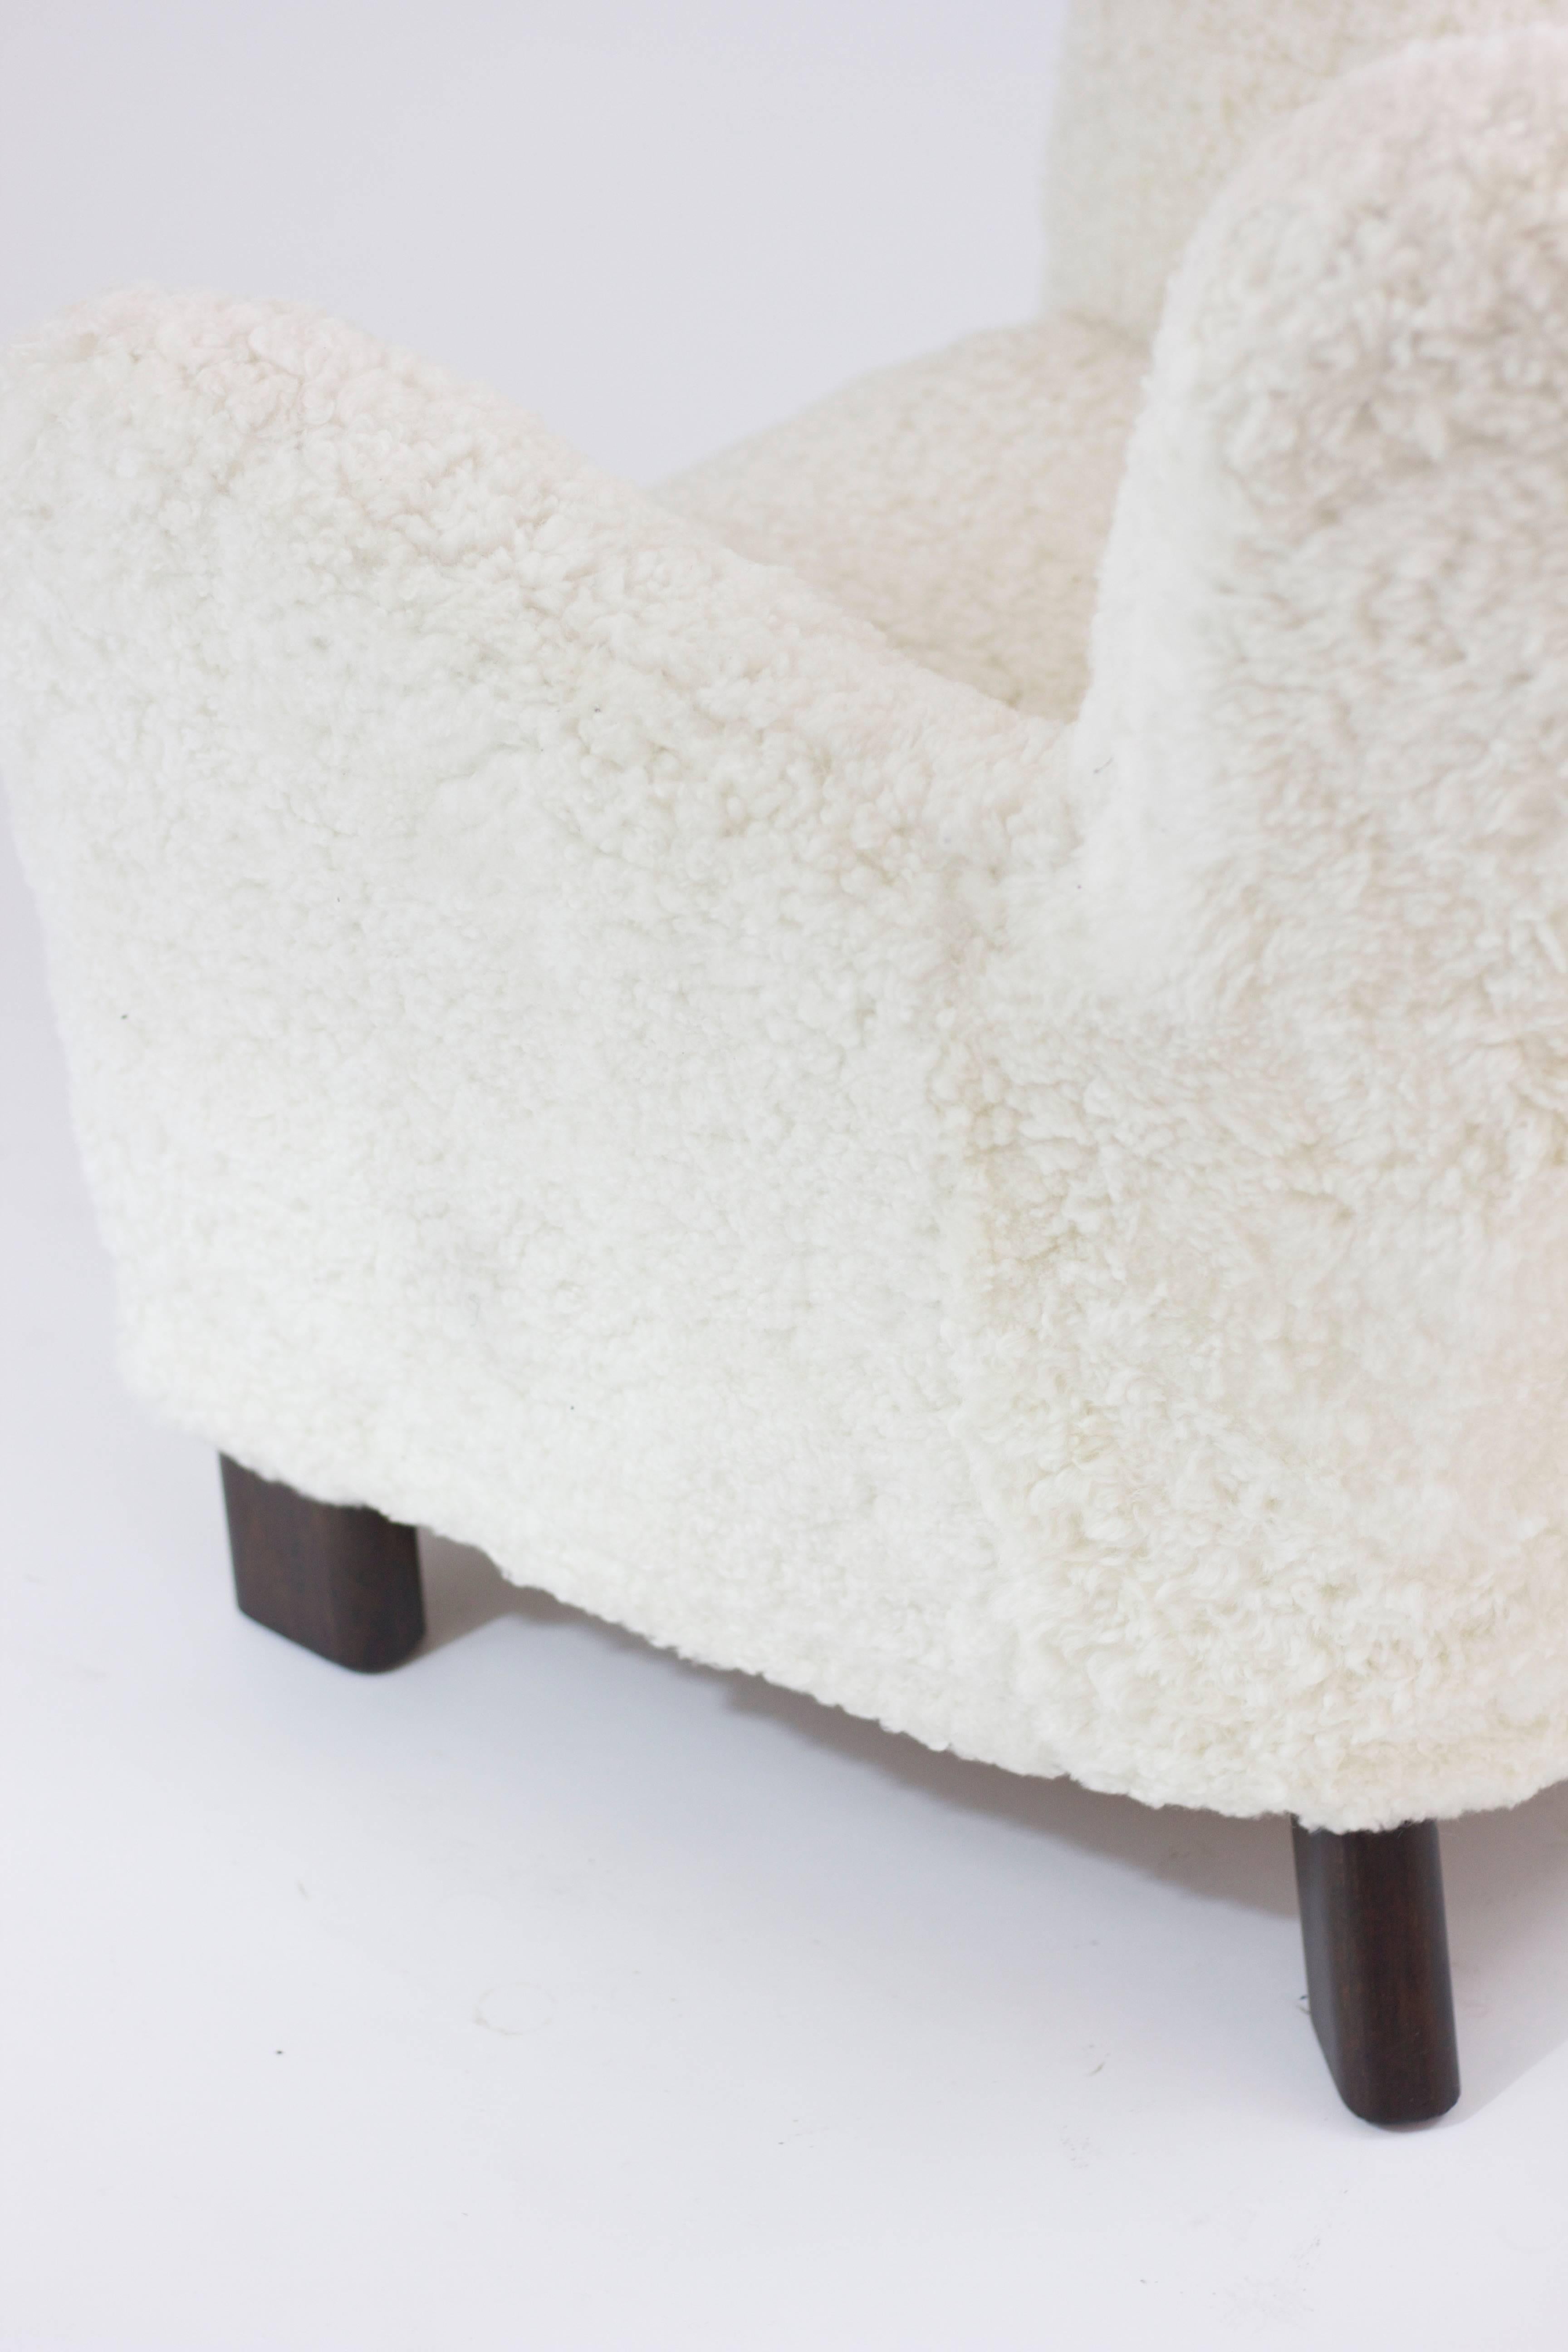 Sheepskin Pair of Iconic Midcentury Danish Armchairs Designed by Fritz Hansen For Sale